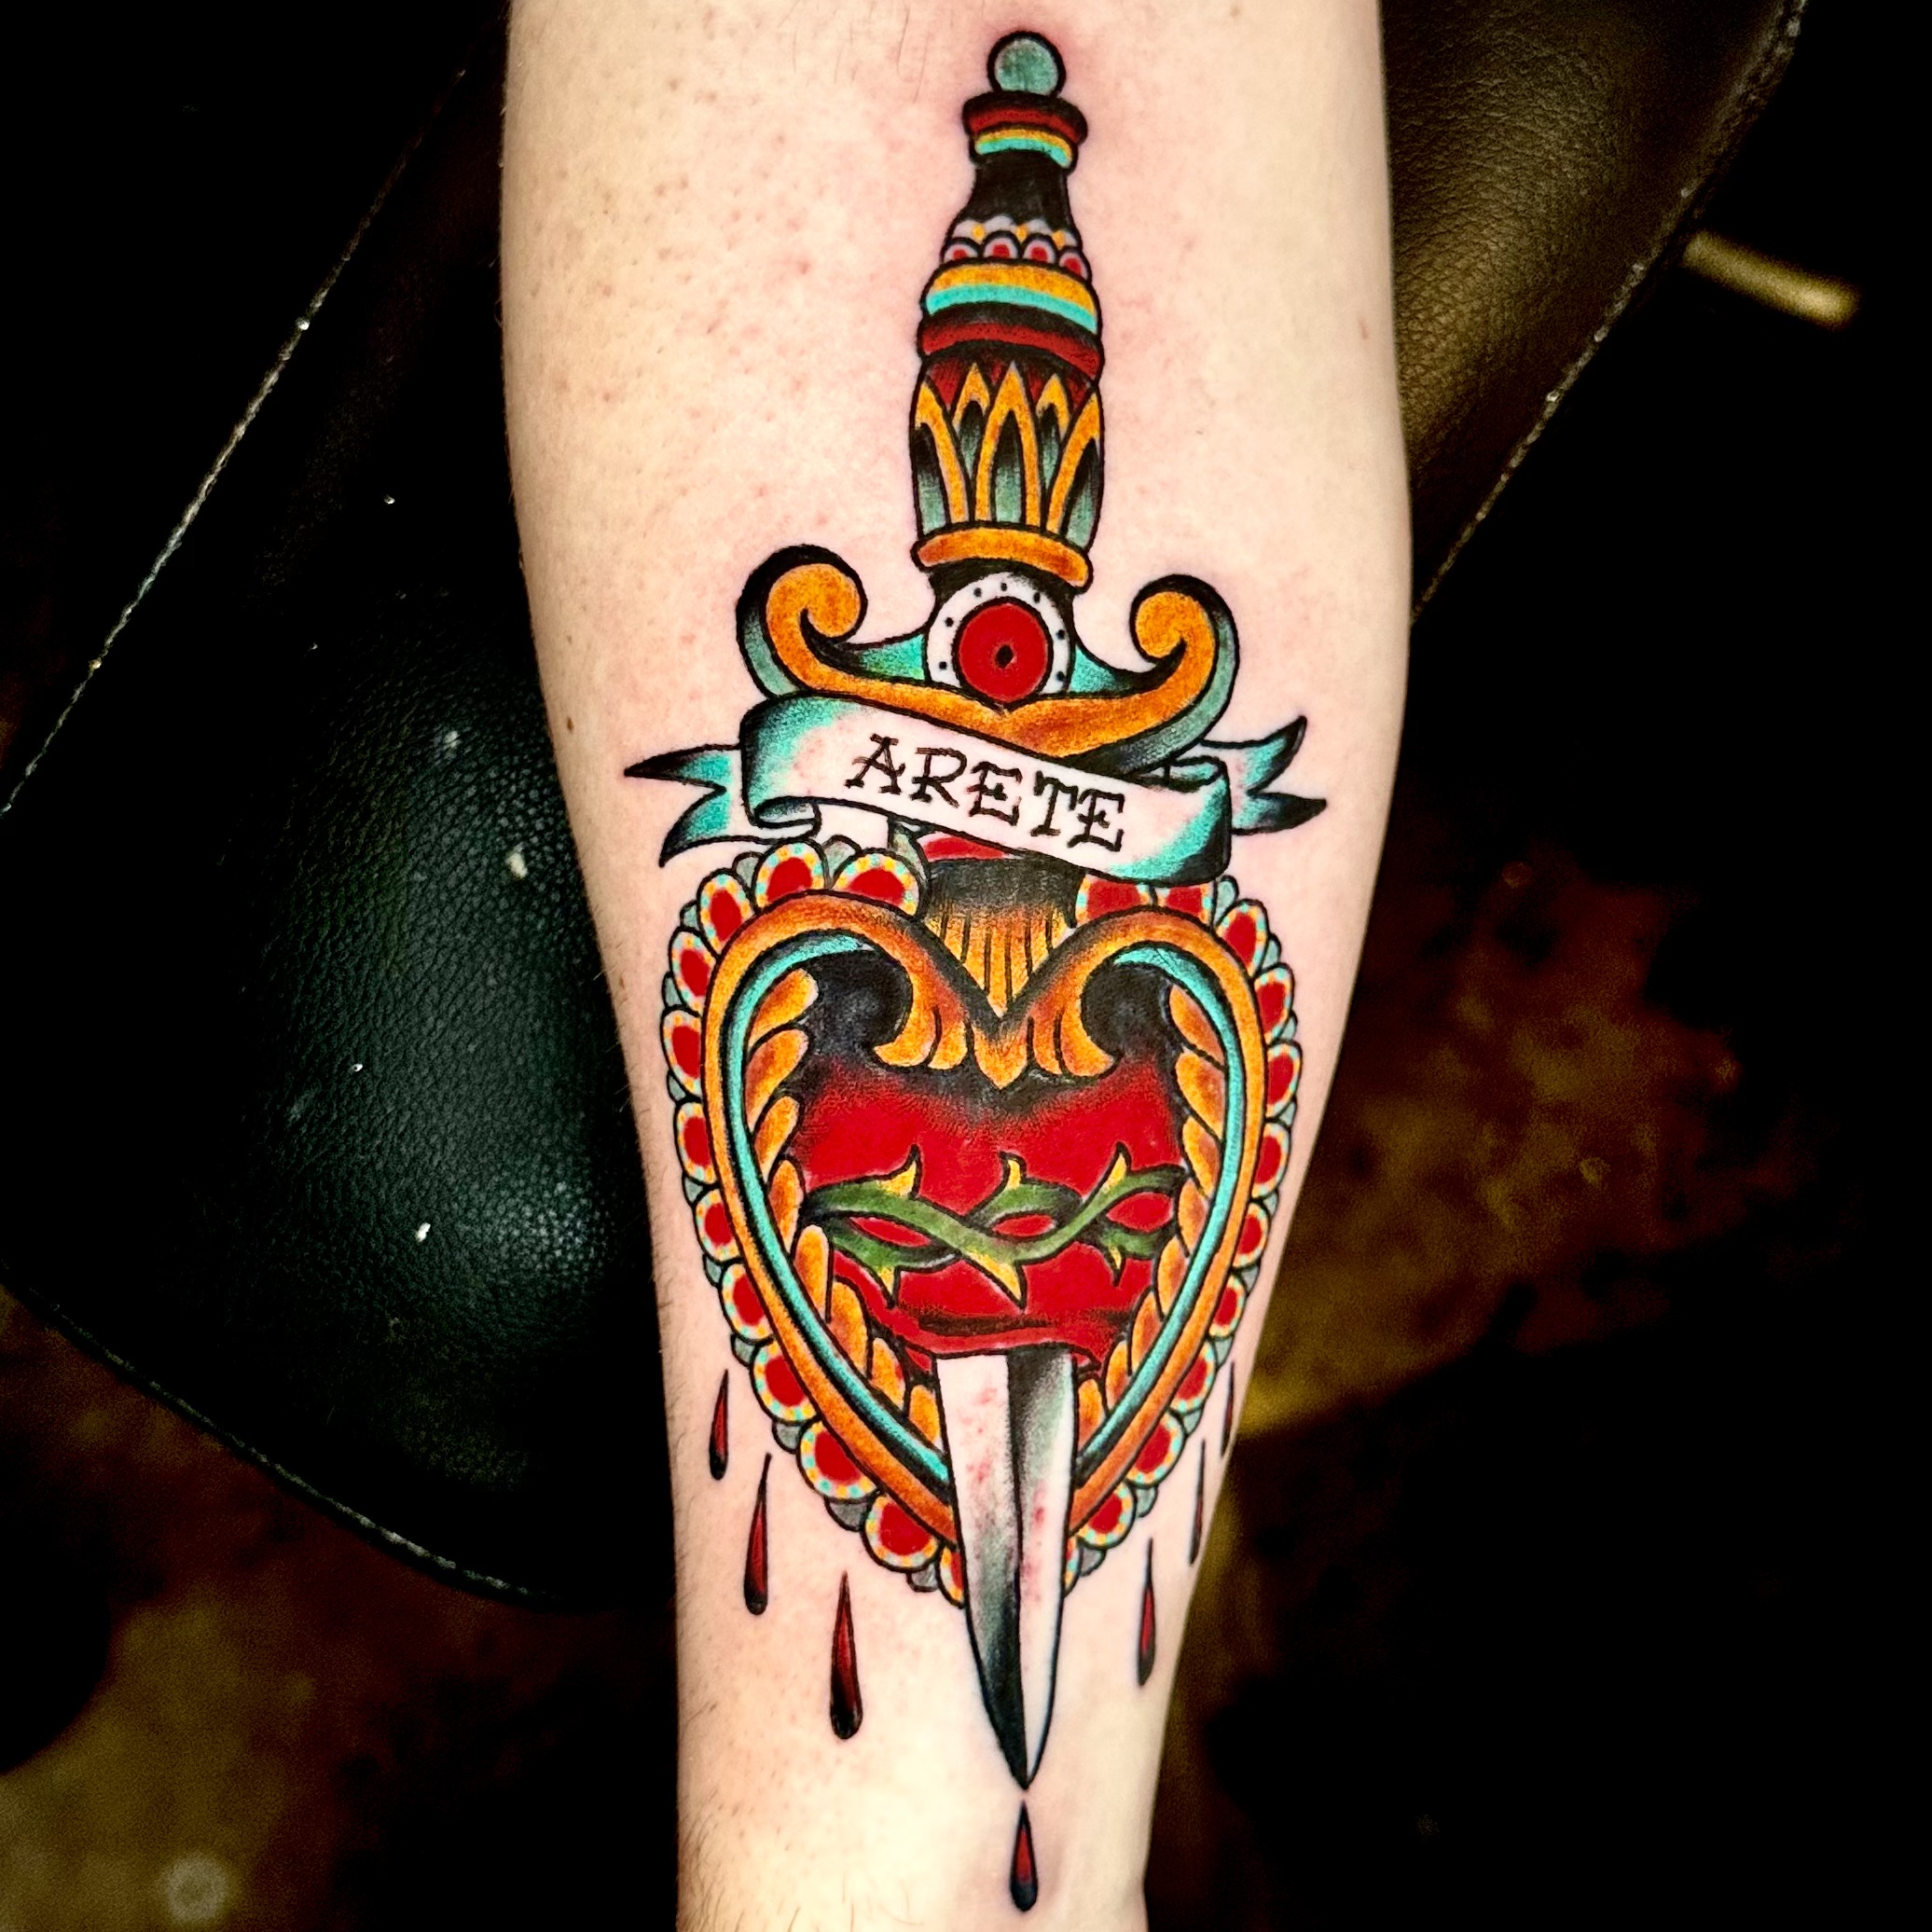 tattoo of a sword through a heart